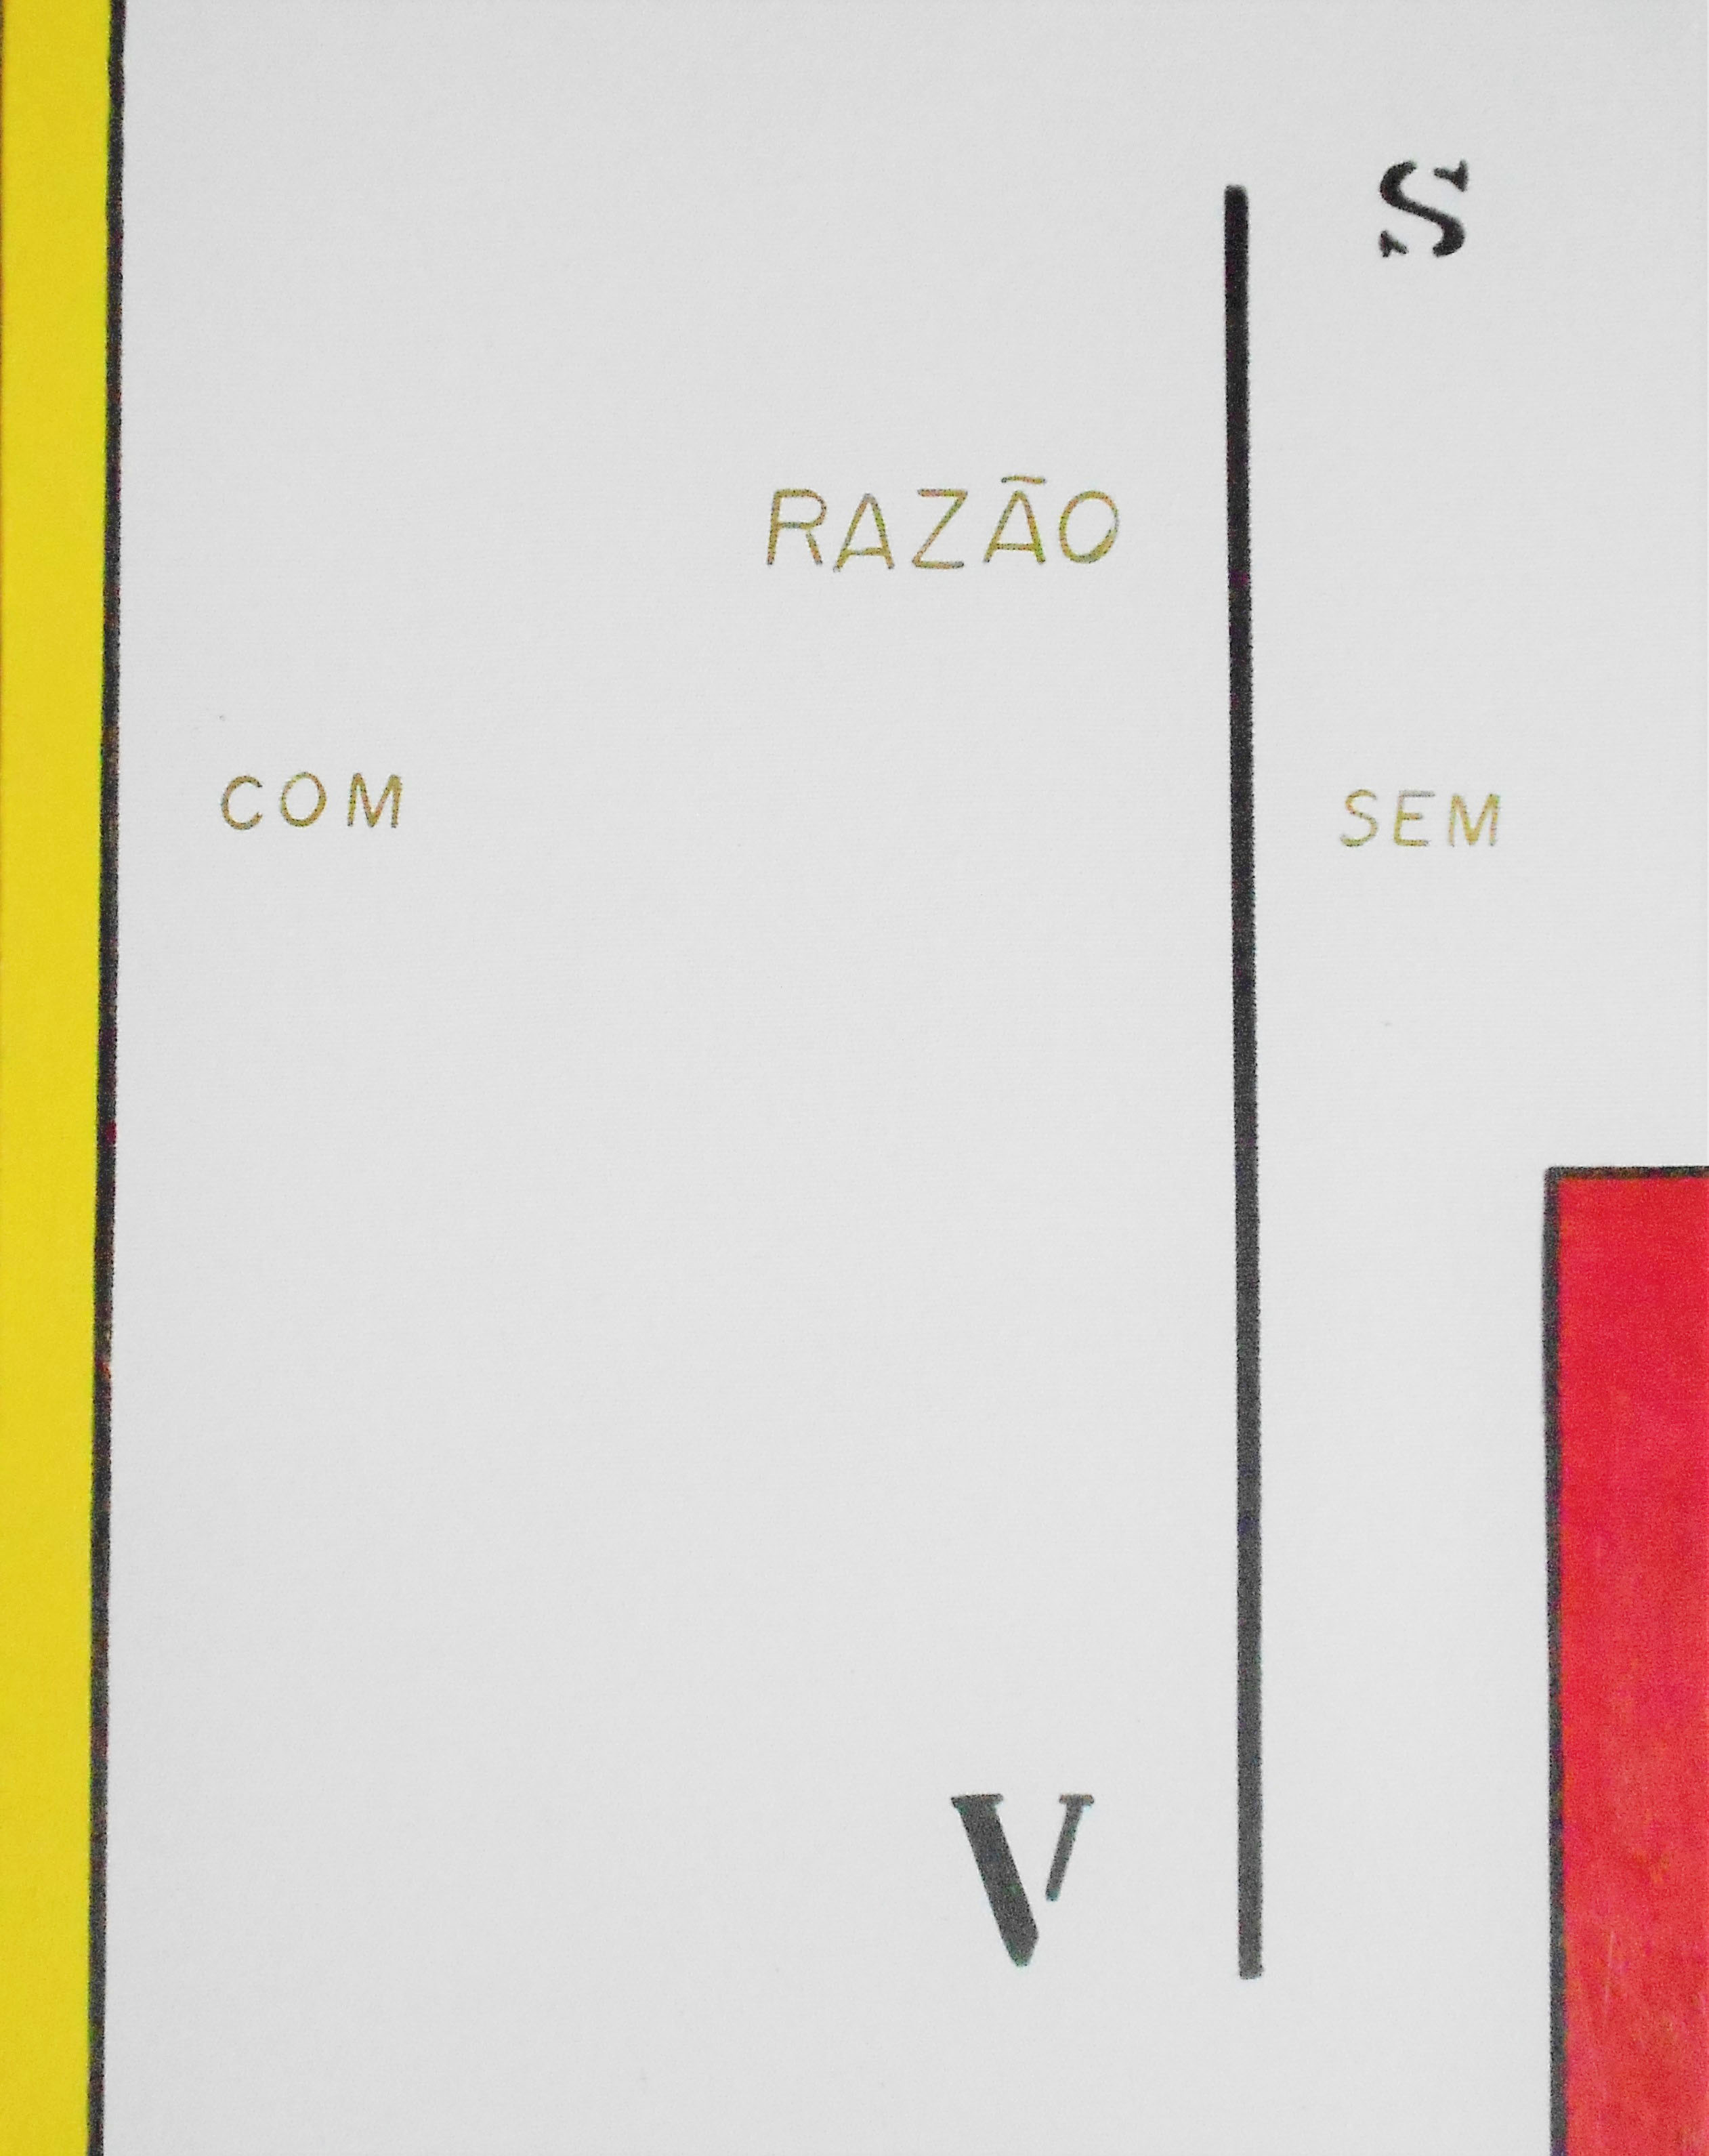 04. Almandrade, Poema Visual VS, 1983 1993, Acrílica sobre tela, 35 x 27 cm